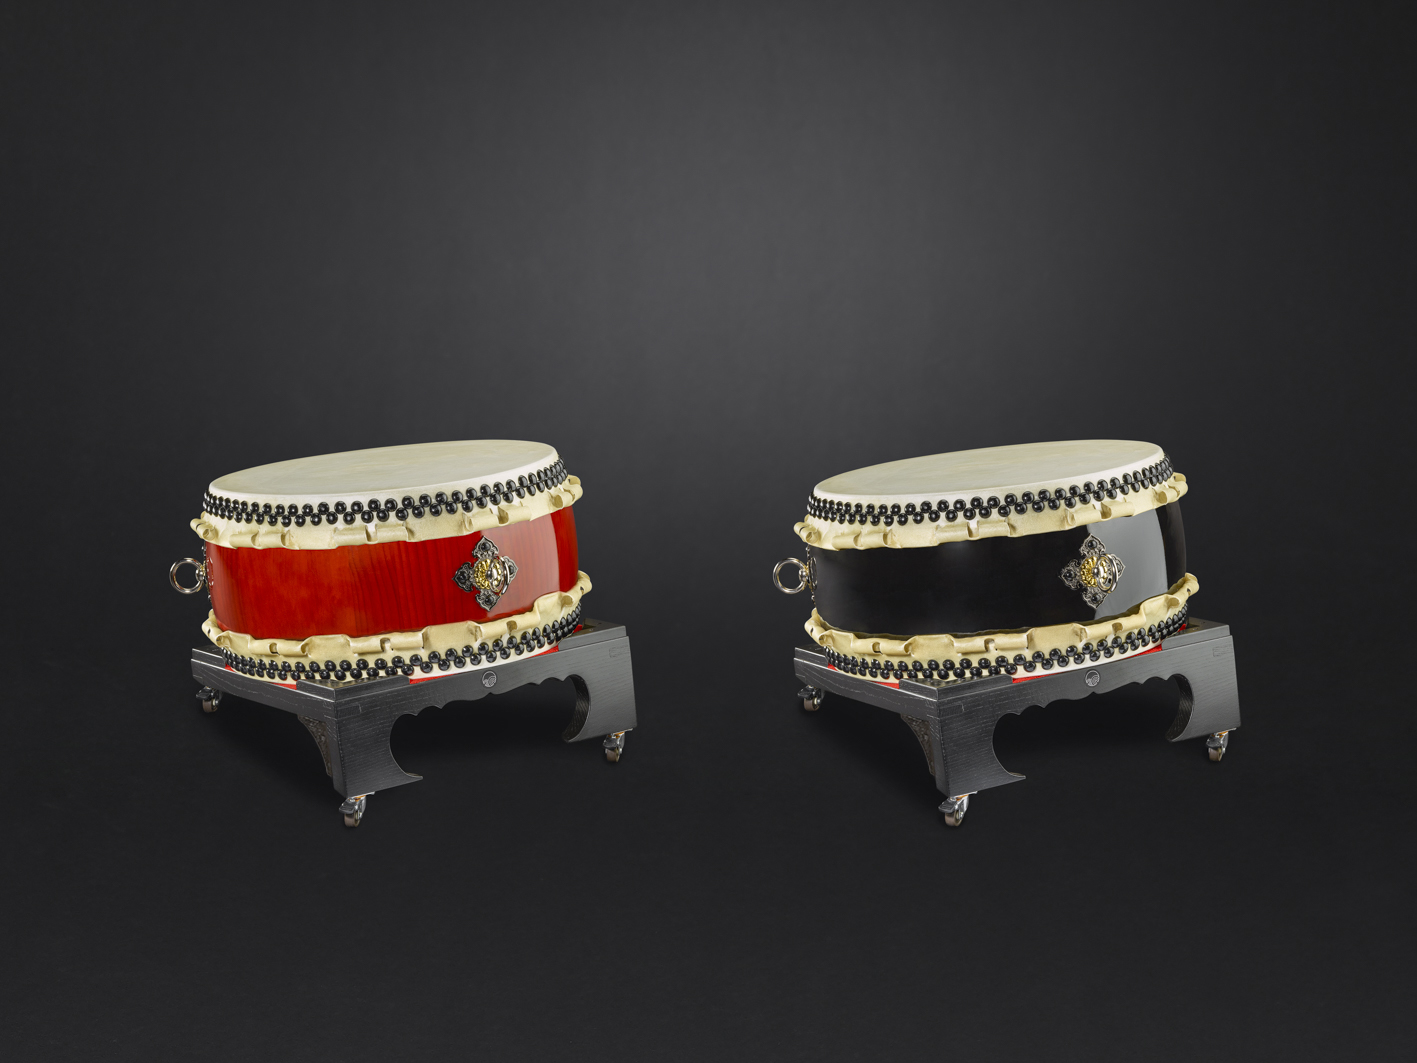 Hira-Daiko drums hq Ø48cm/h:25cm (shiny-black & red-brown) with flat-stand  (680€/130€)